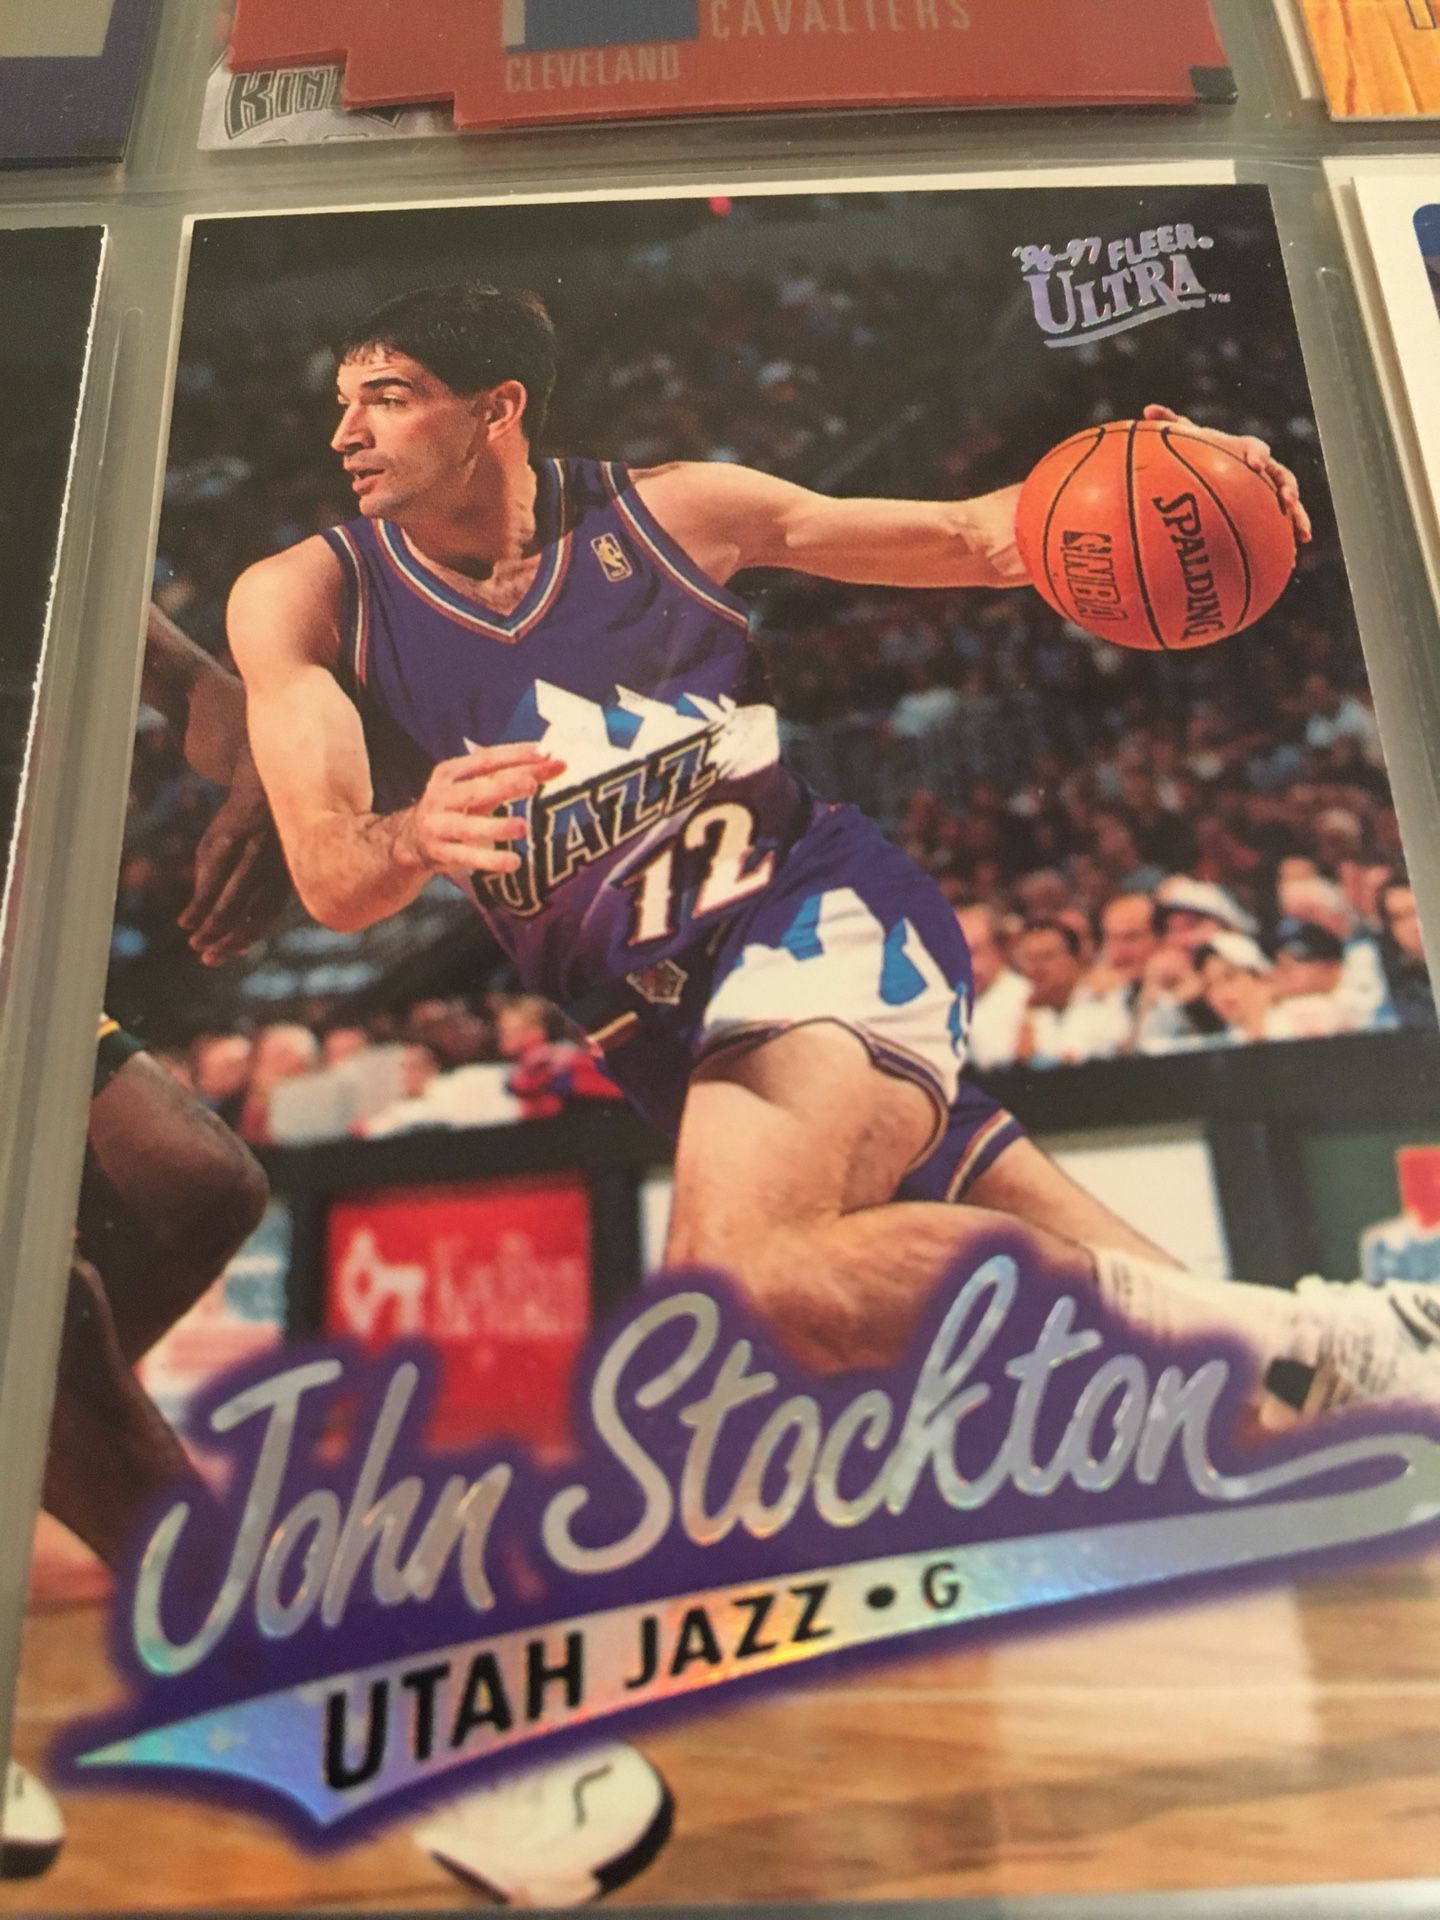 John Stockton and Karl Malone Basketball Cards!! Awesome set!!